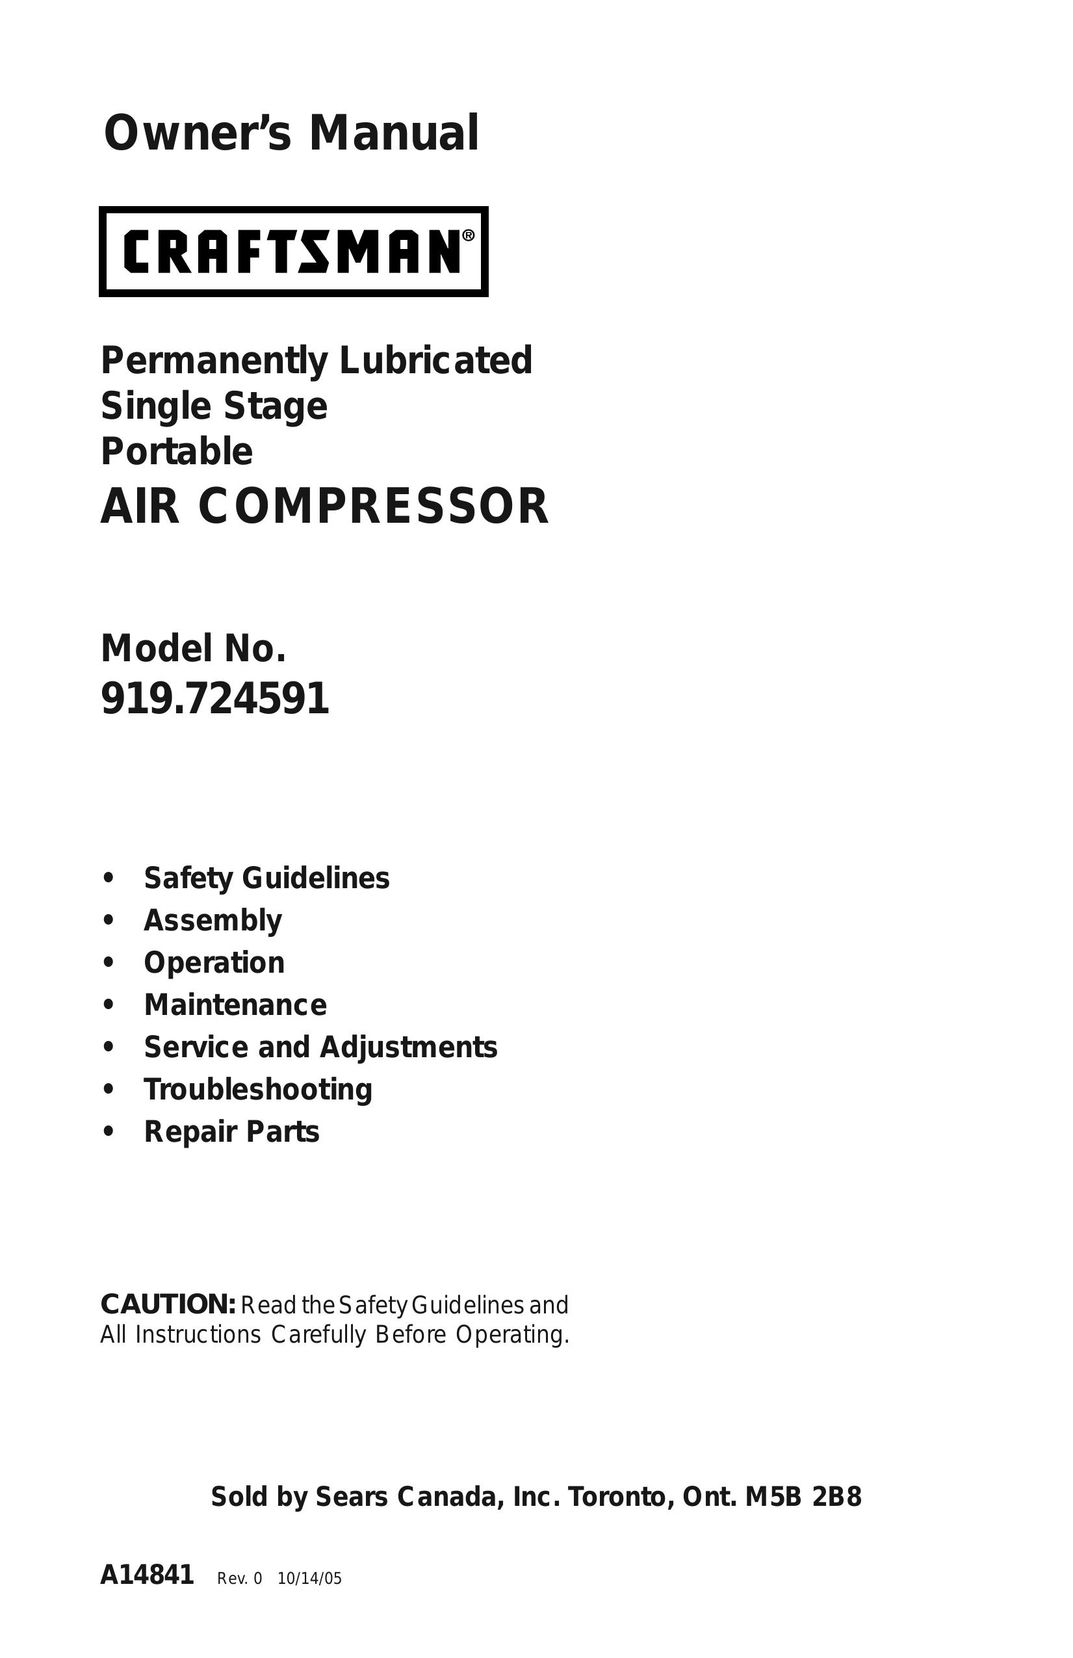 Craftsman 919.724591 Air Compressor User Manual